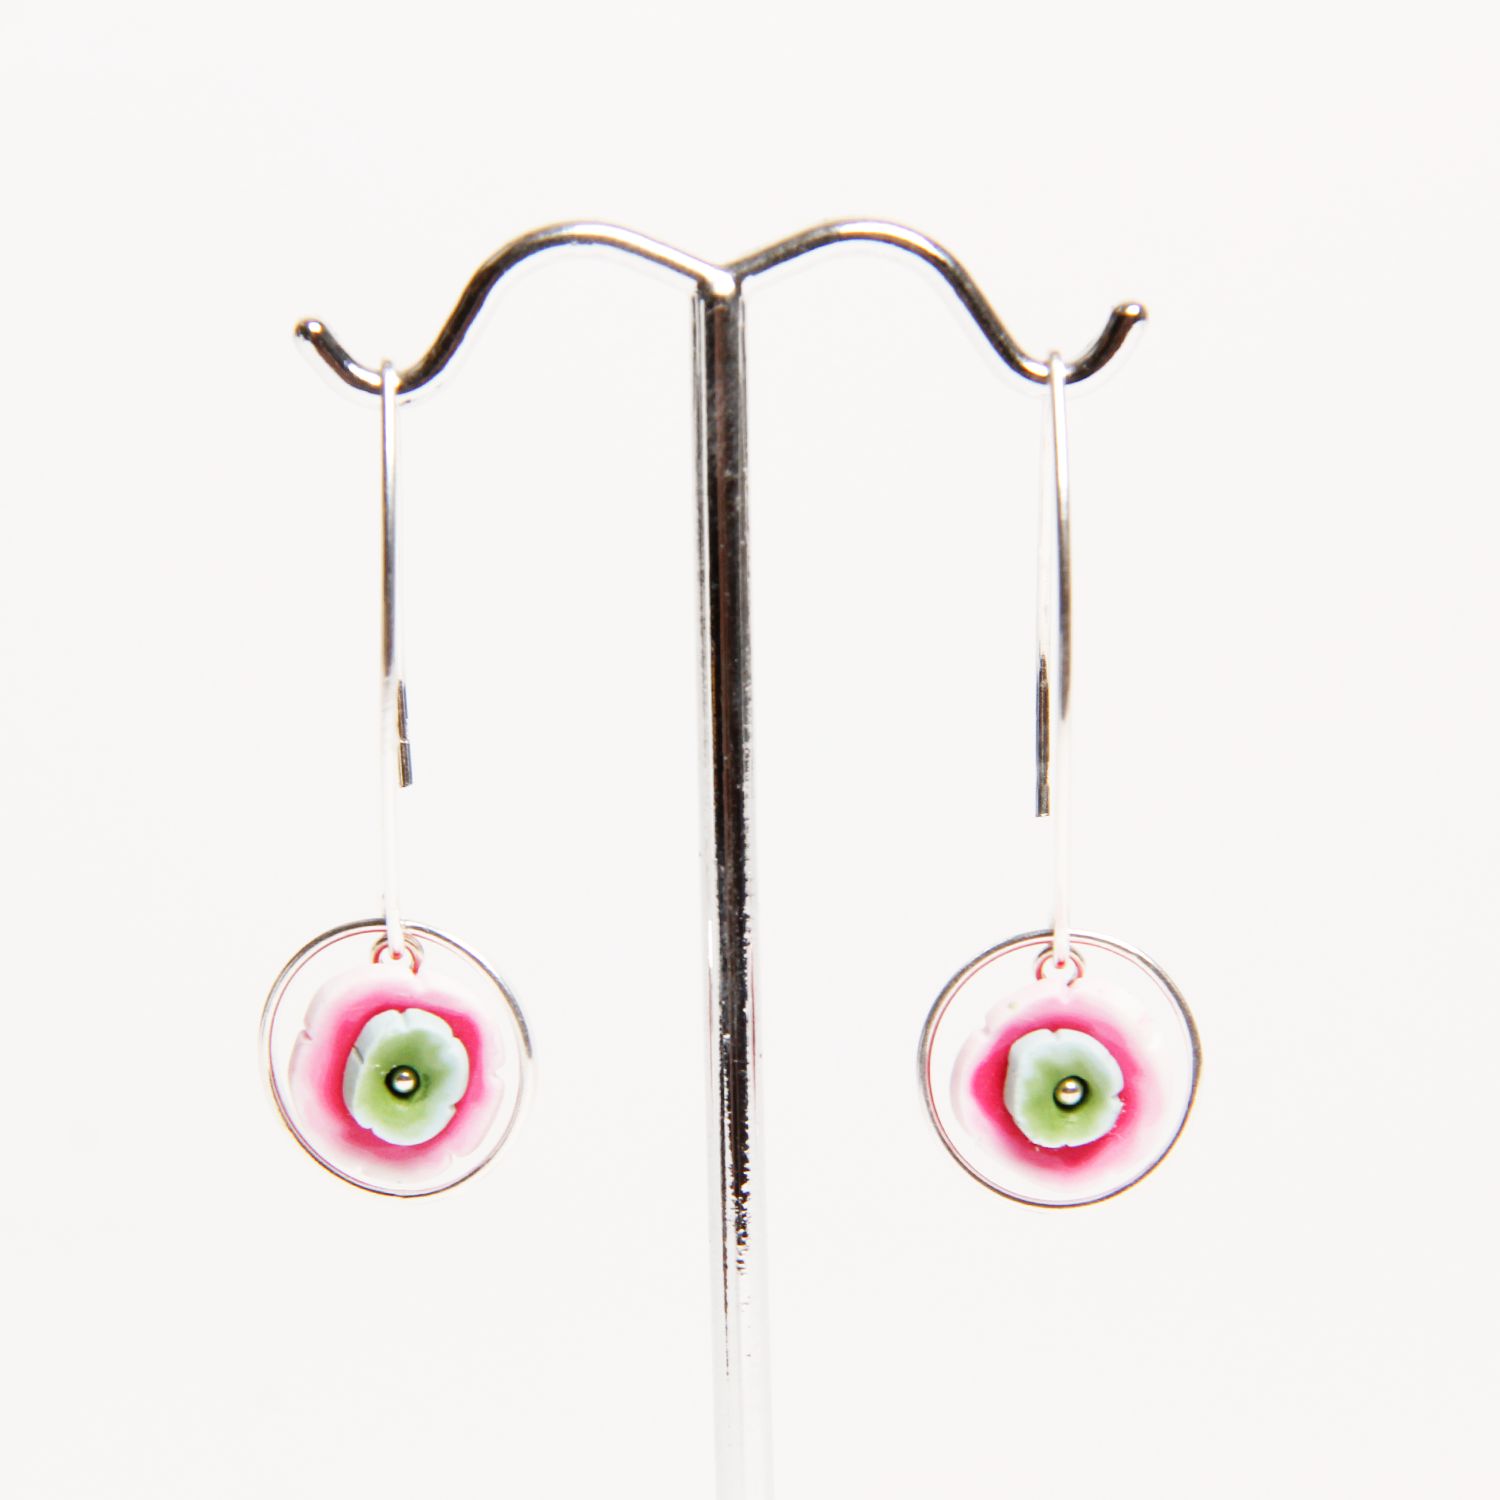 Subtle Details: Pink Soul Earring Product Image 1 of 2